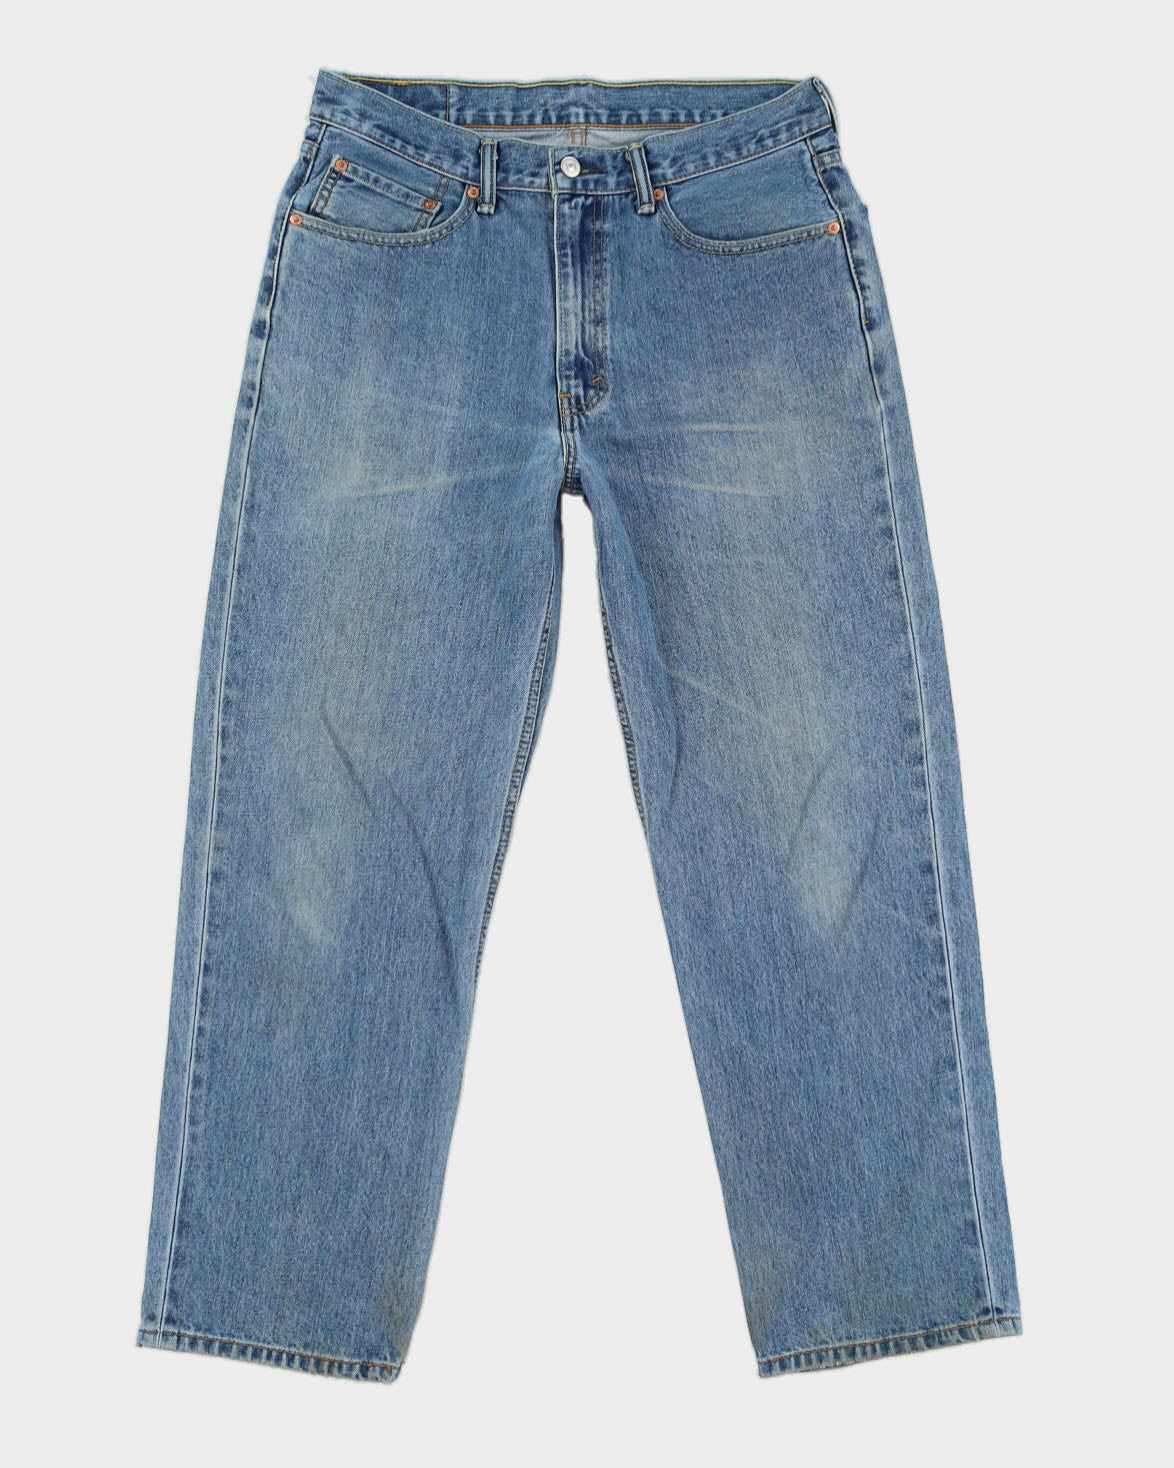 Levi's 505 Medium Washed Blue Jeans - W34 L30